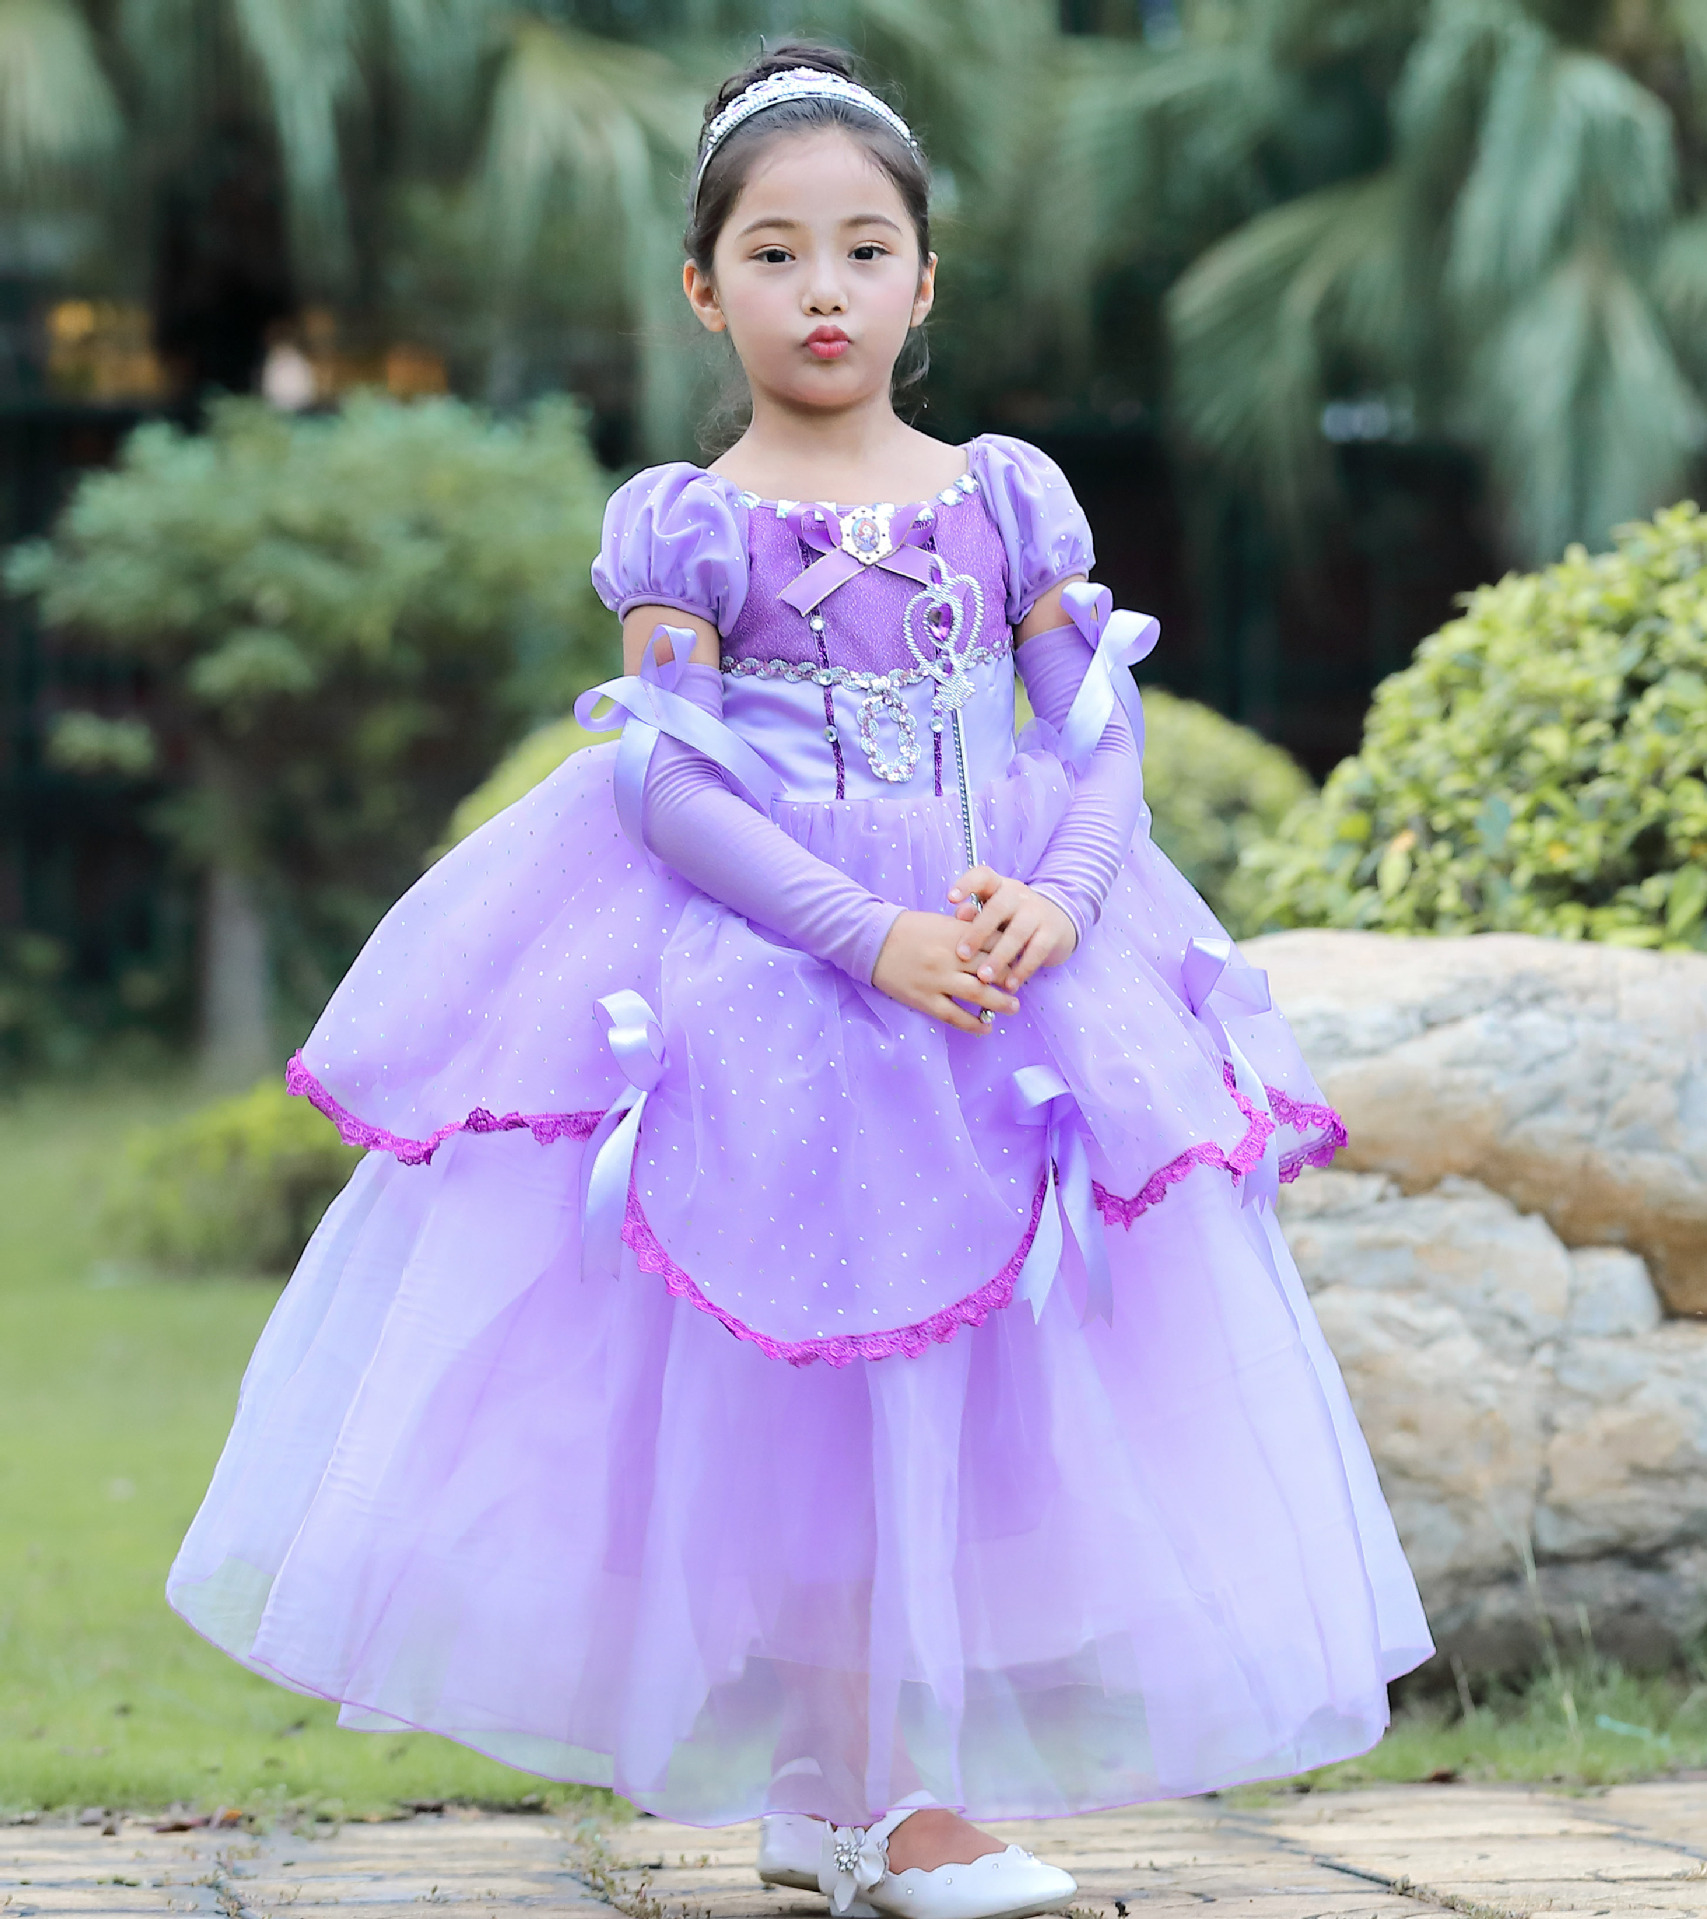 purple skirts and sleevelet